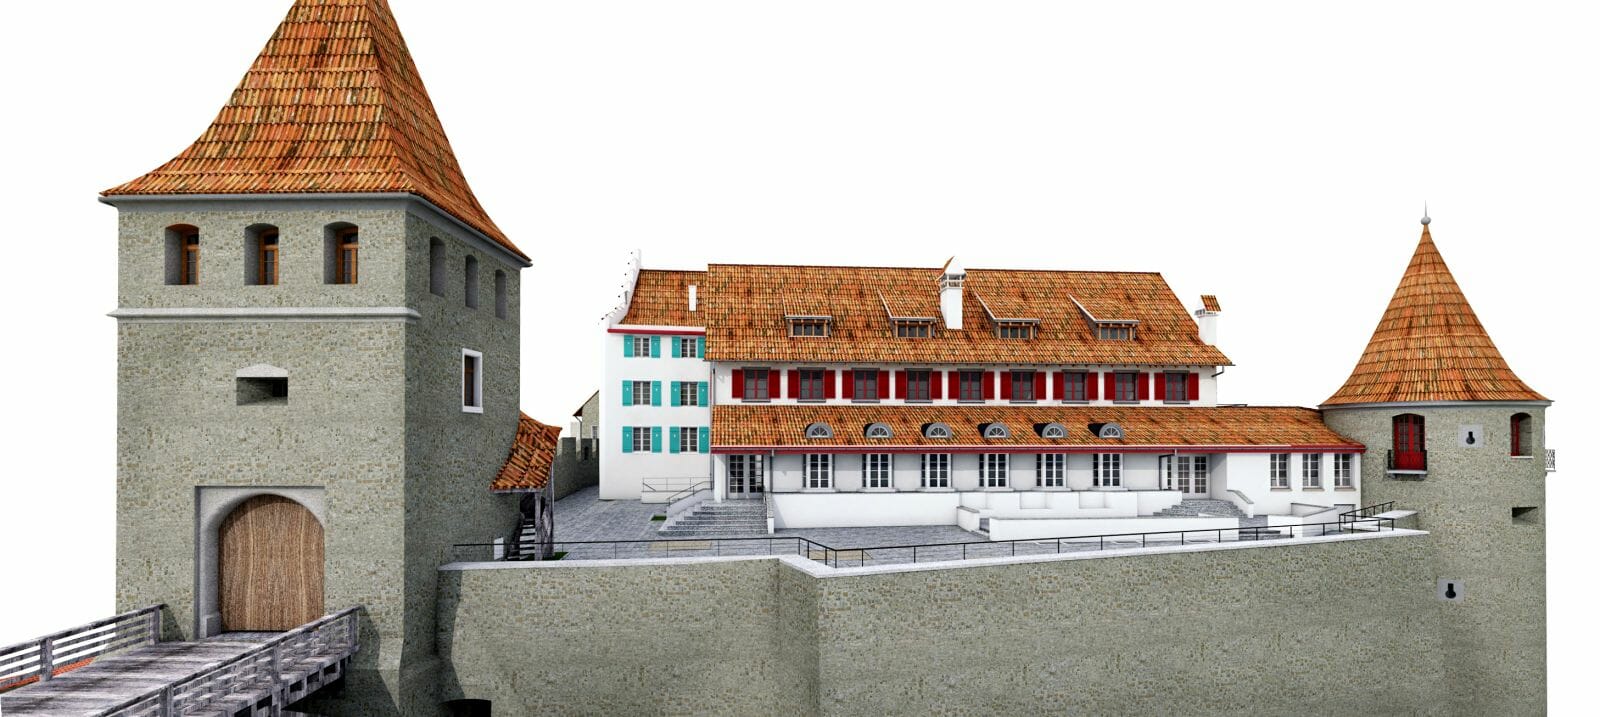 Laufen Castle プロジェクト